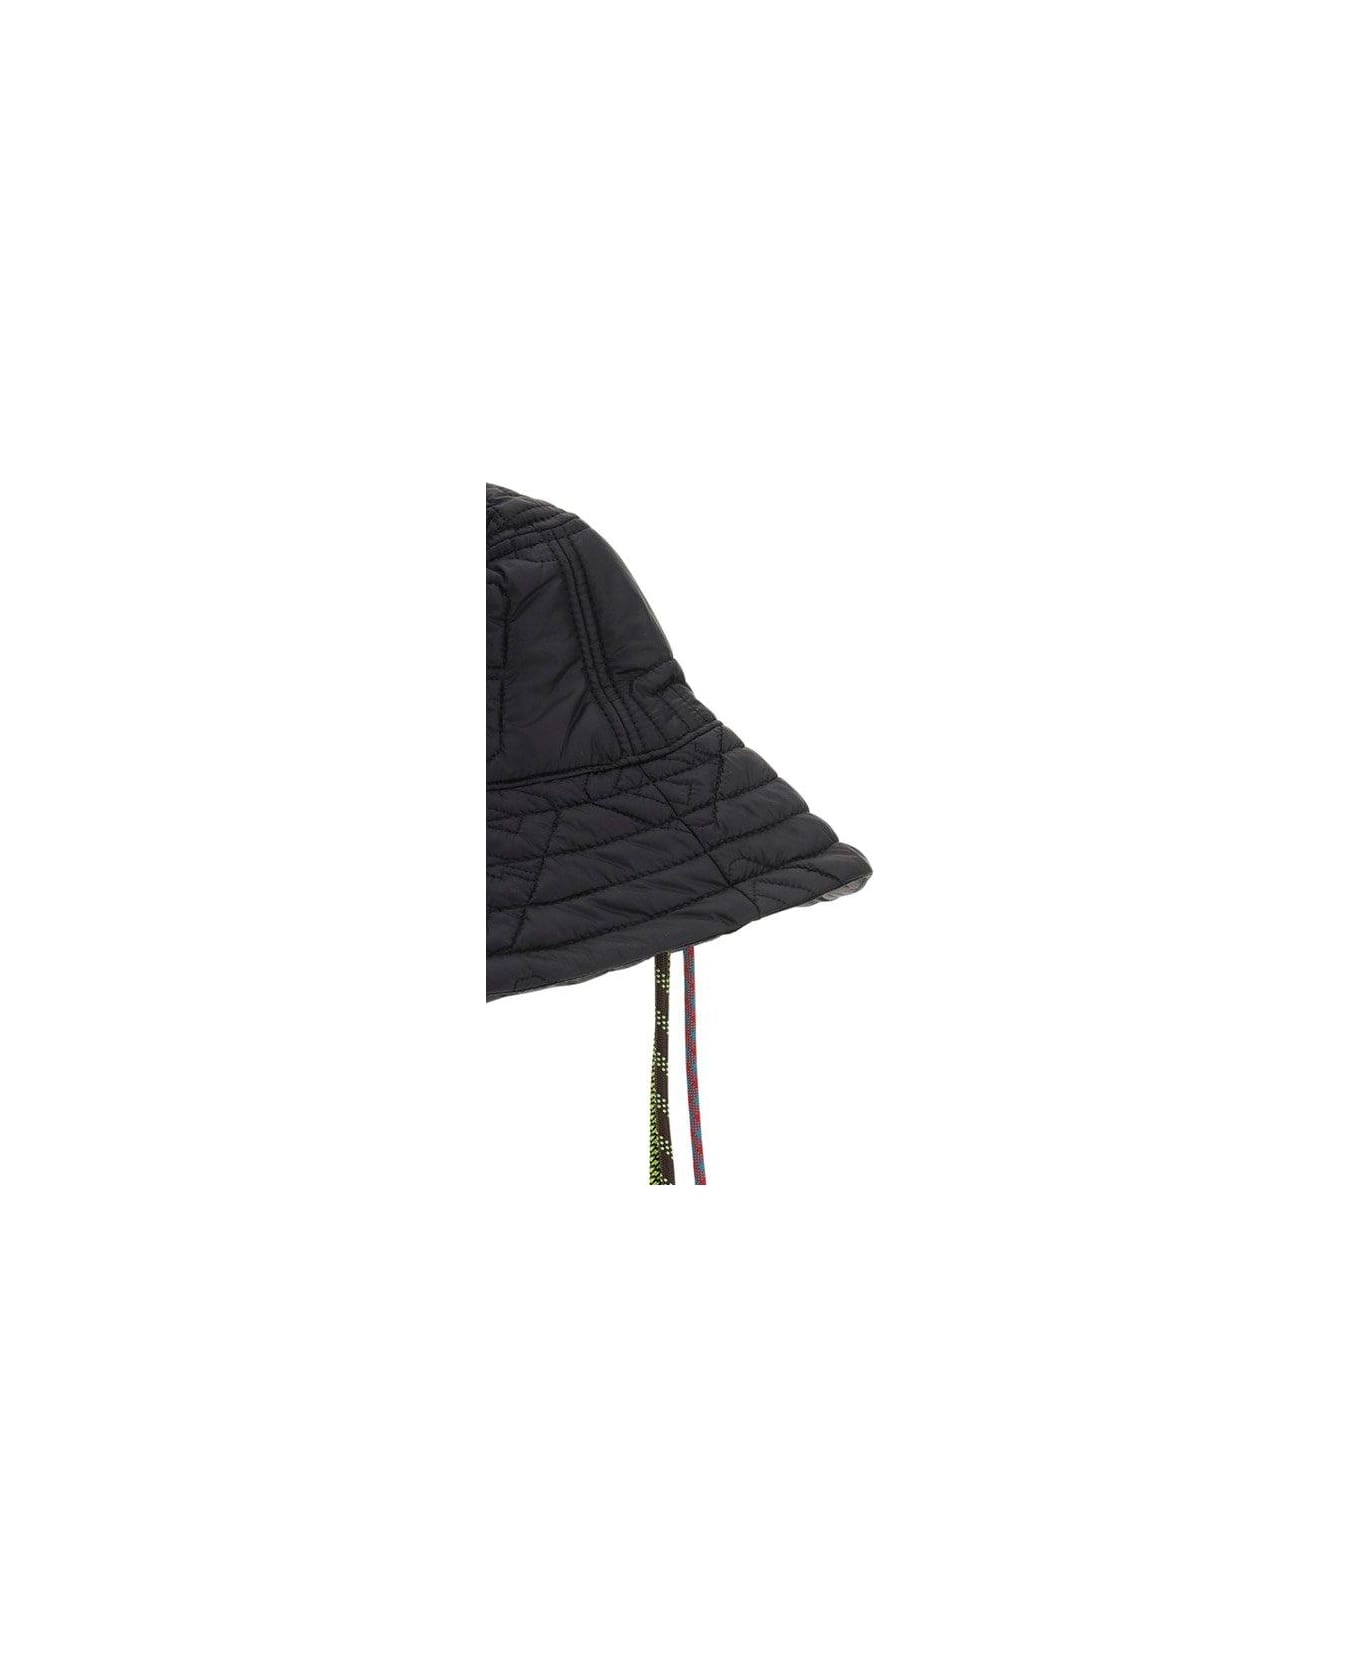 AMBUSH Padded Bucket Hat - Black